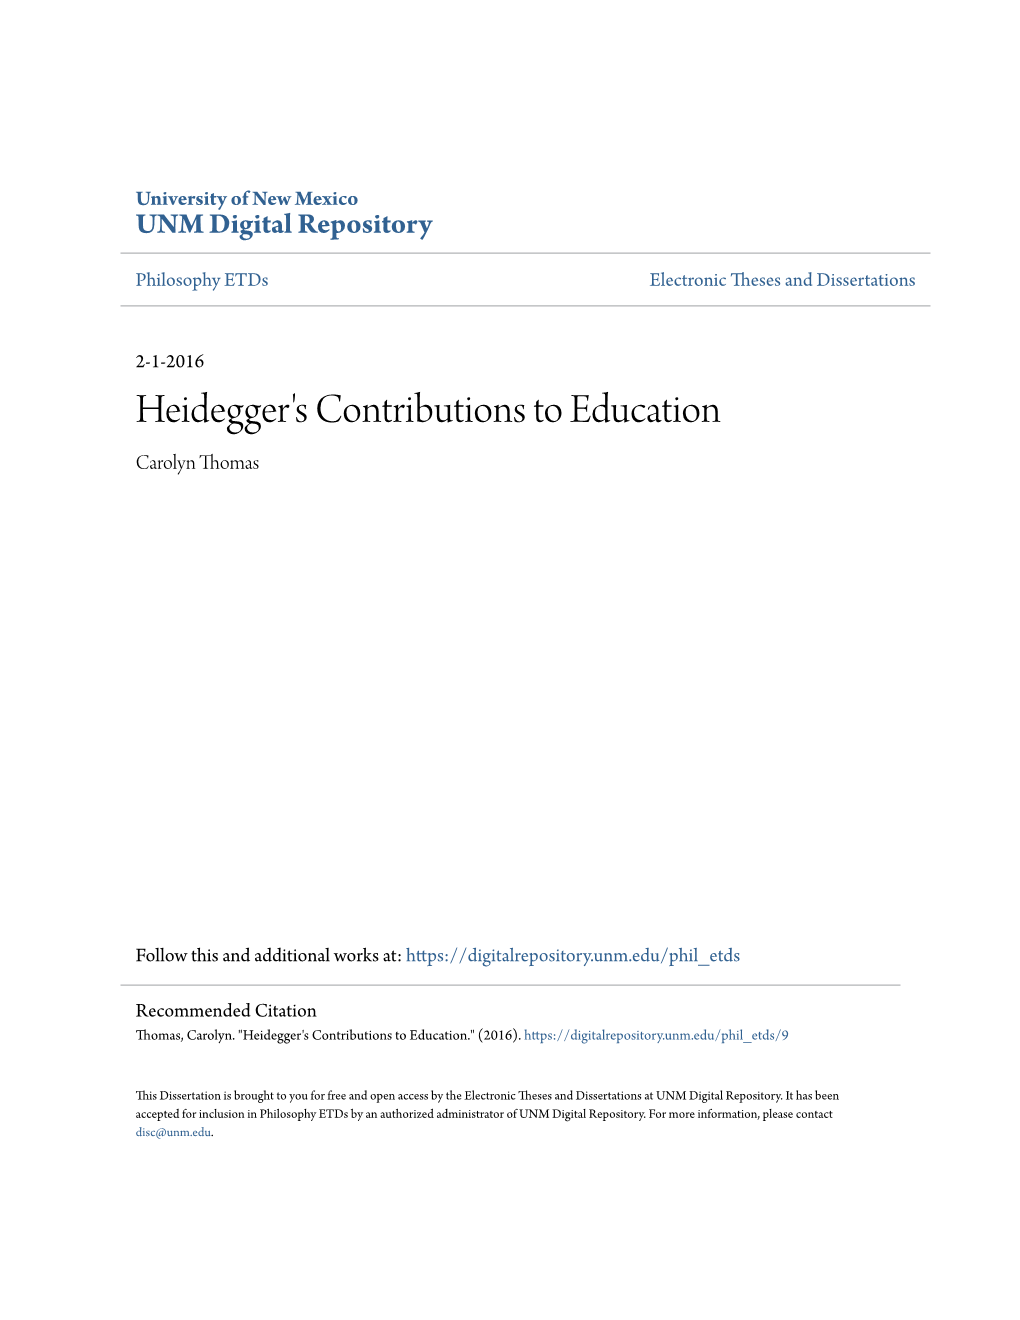 Heidegger's Contributions to Education Carolyn Thomas